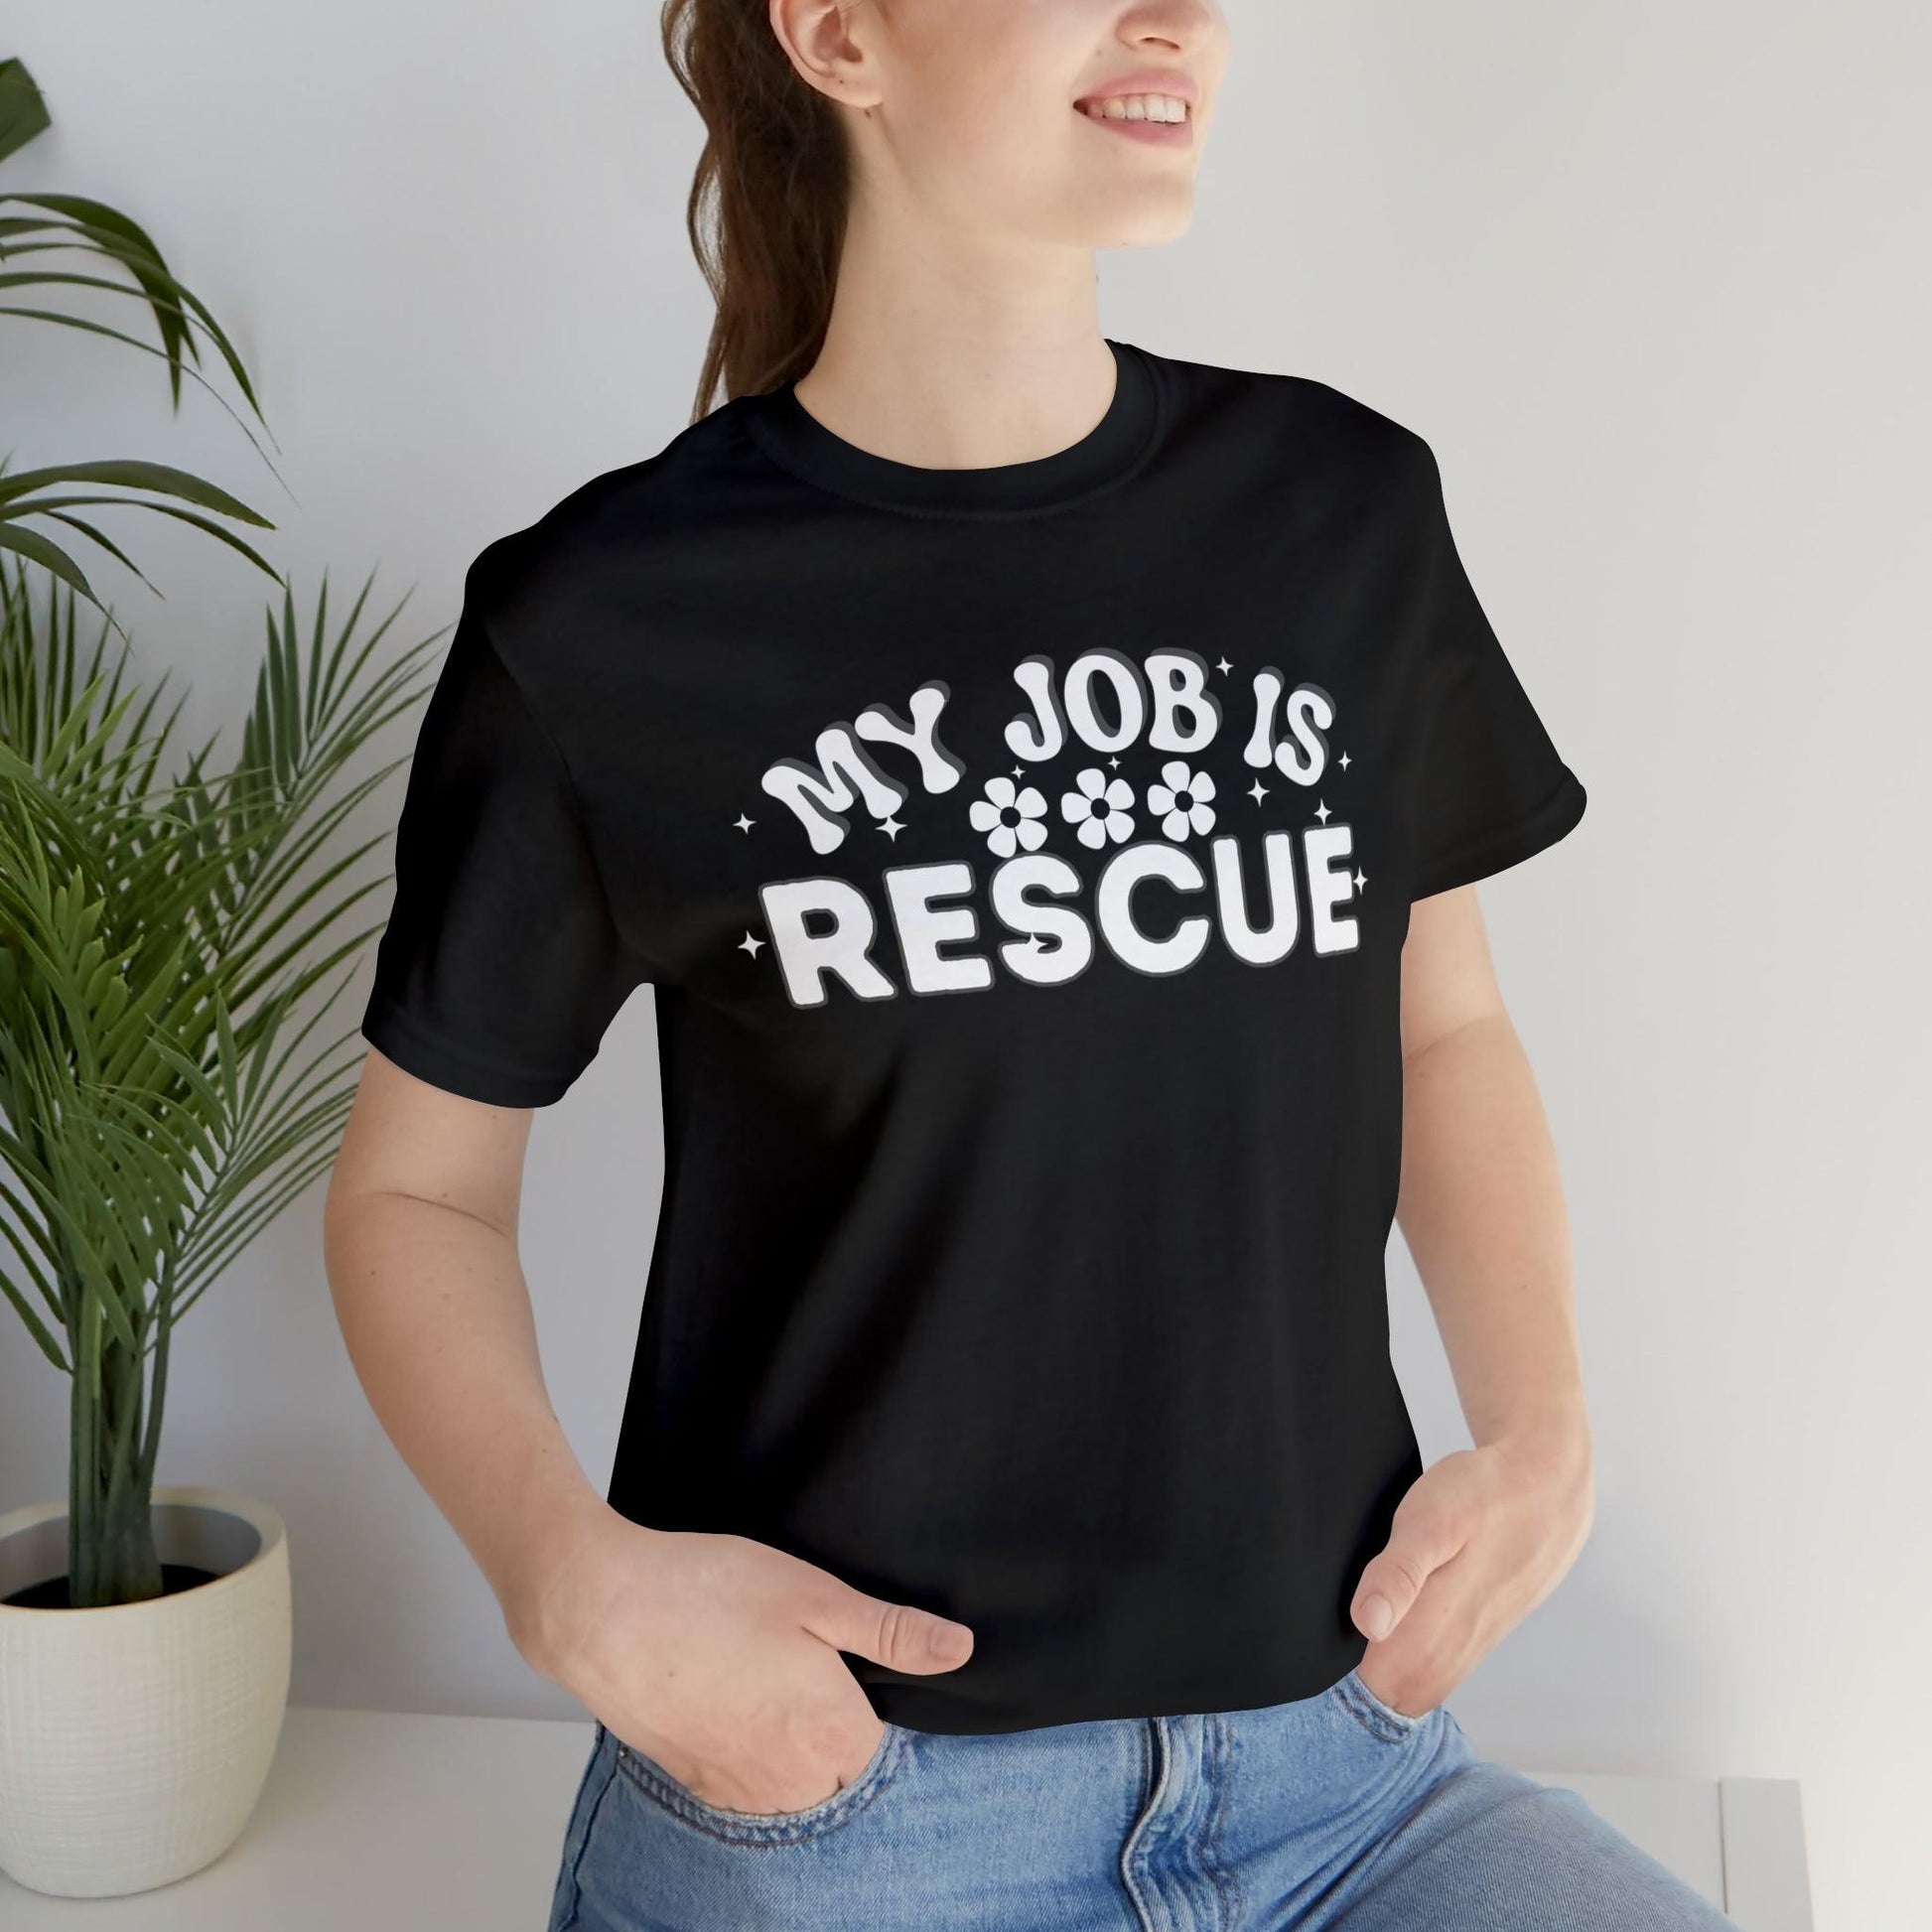 My Job is Rescue Shirt Firefighter Shirt Coast Guard Shirt - Giftsmojo